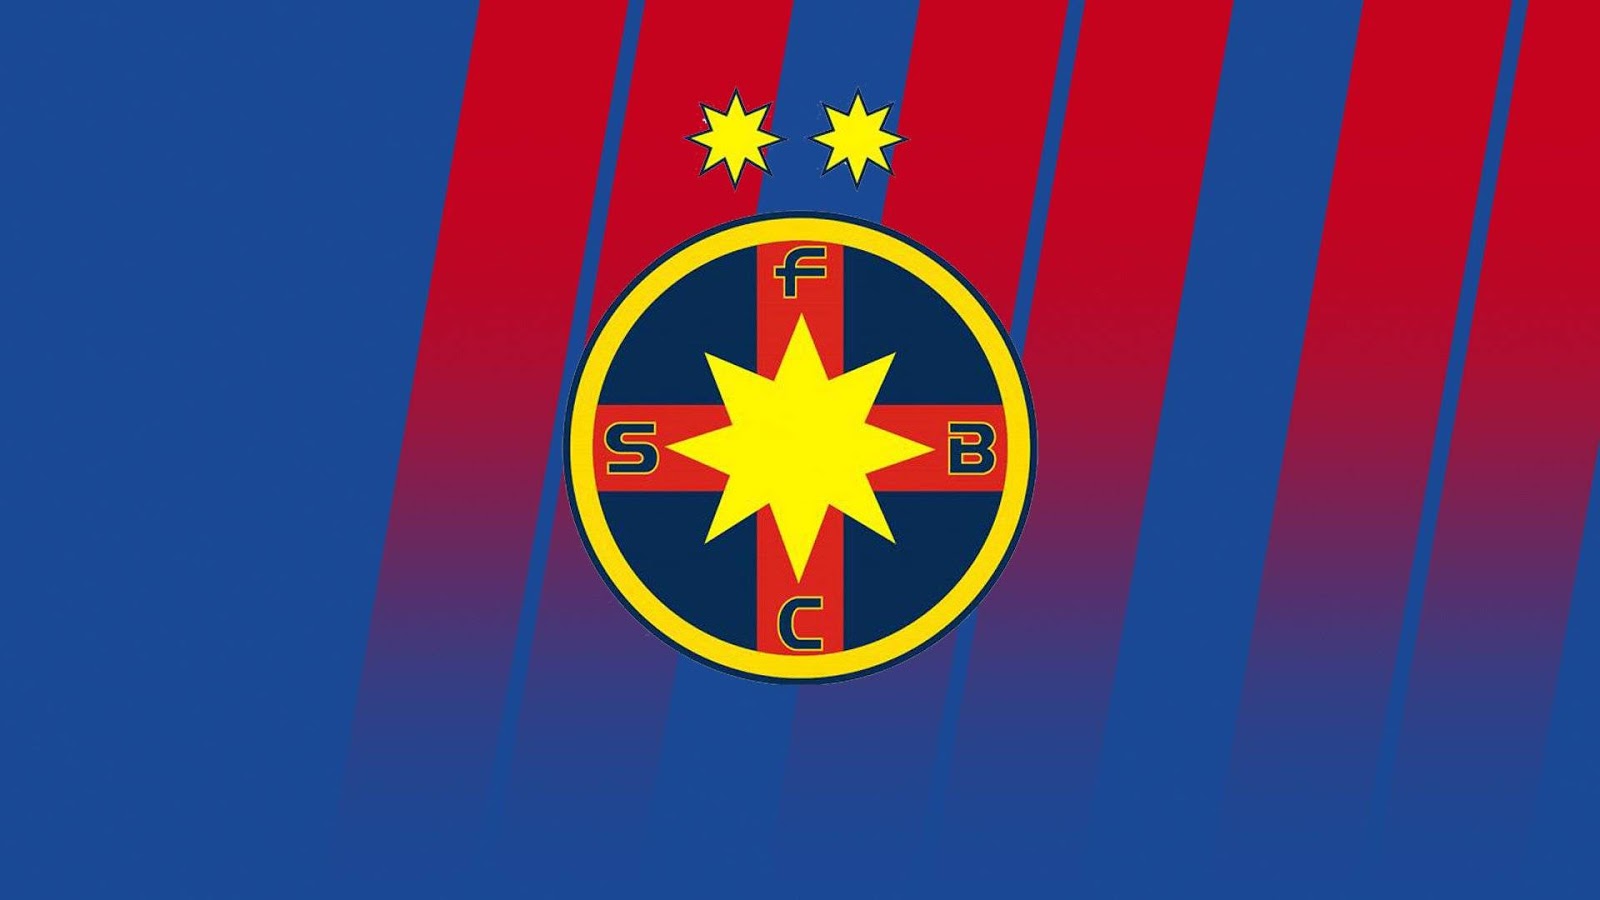 FCSB(Steaua Bucuresti) - Jurnal de cantonament Spania 2019